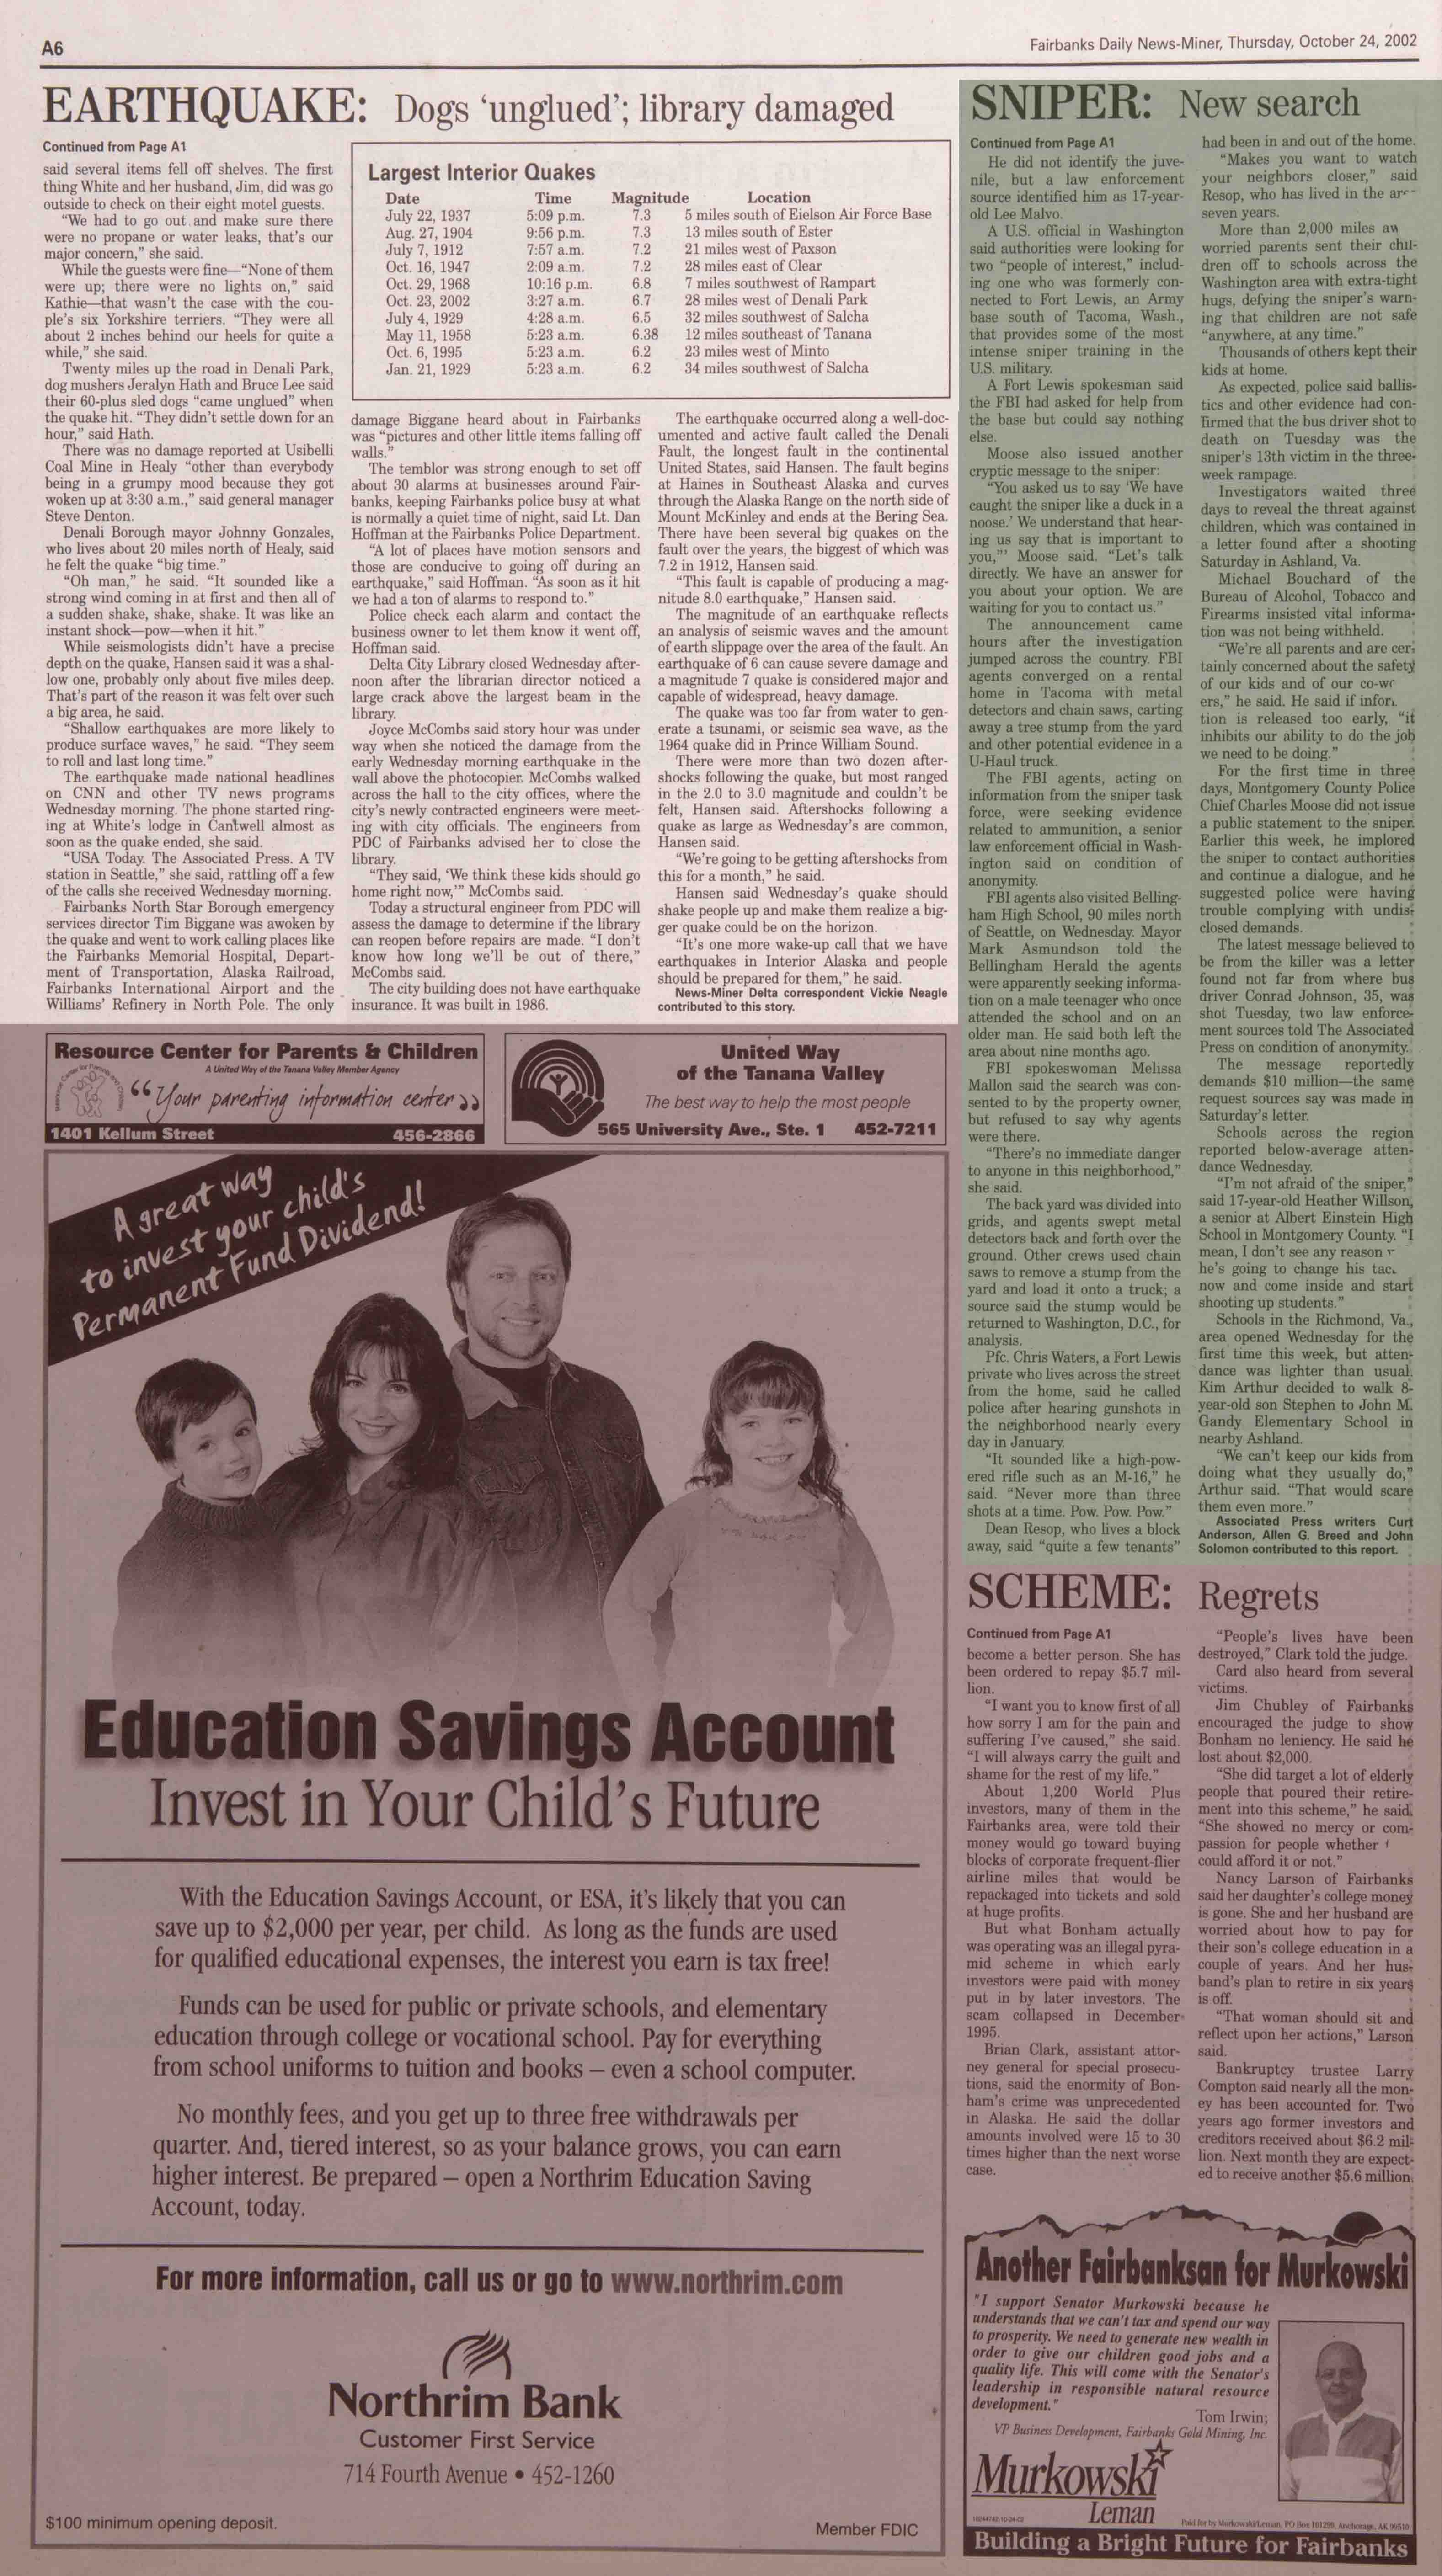 2002 October 24, Fairbanks Daily News-Miner (pg 6)